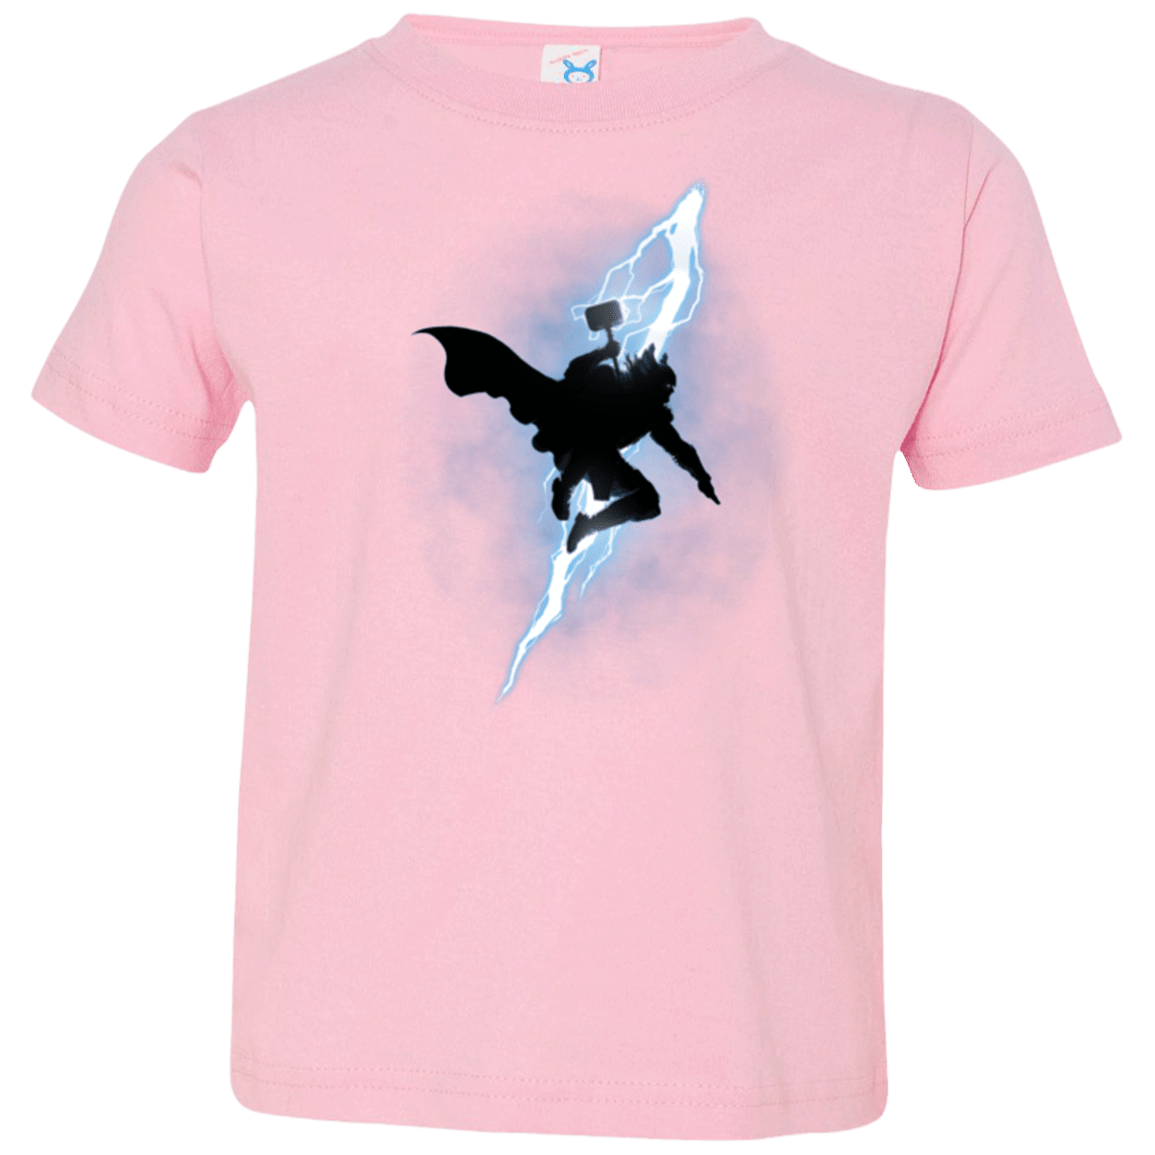 T-Shirts Pink / 2T The Thunder God Returns Toddler Premium T-Shirt